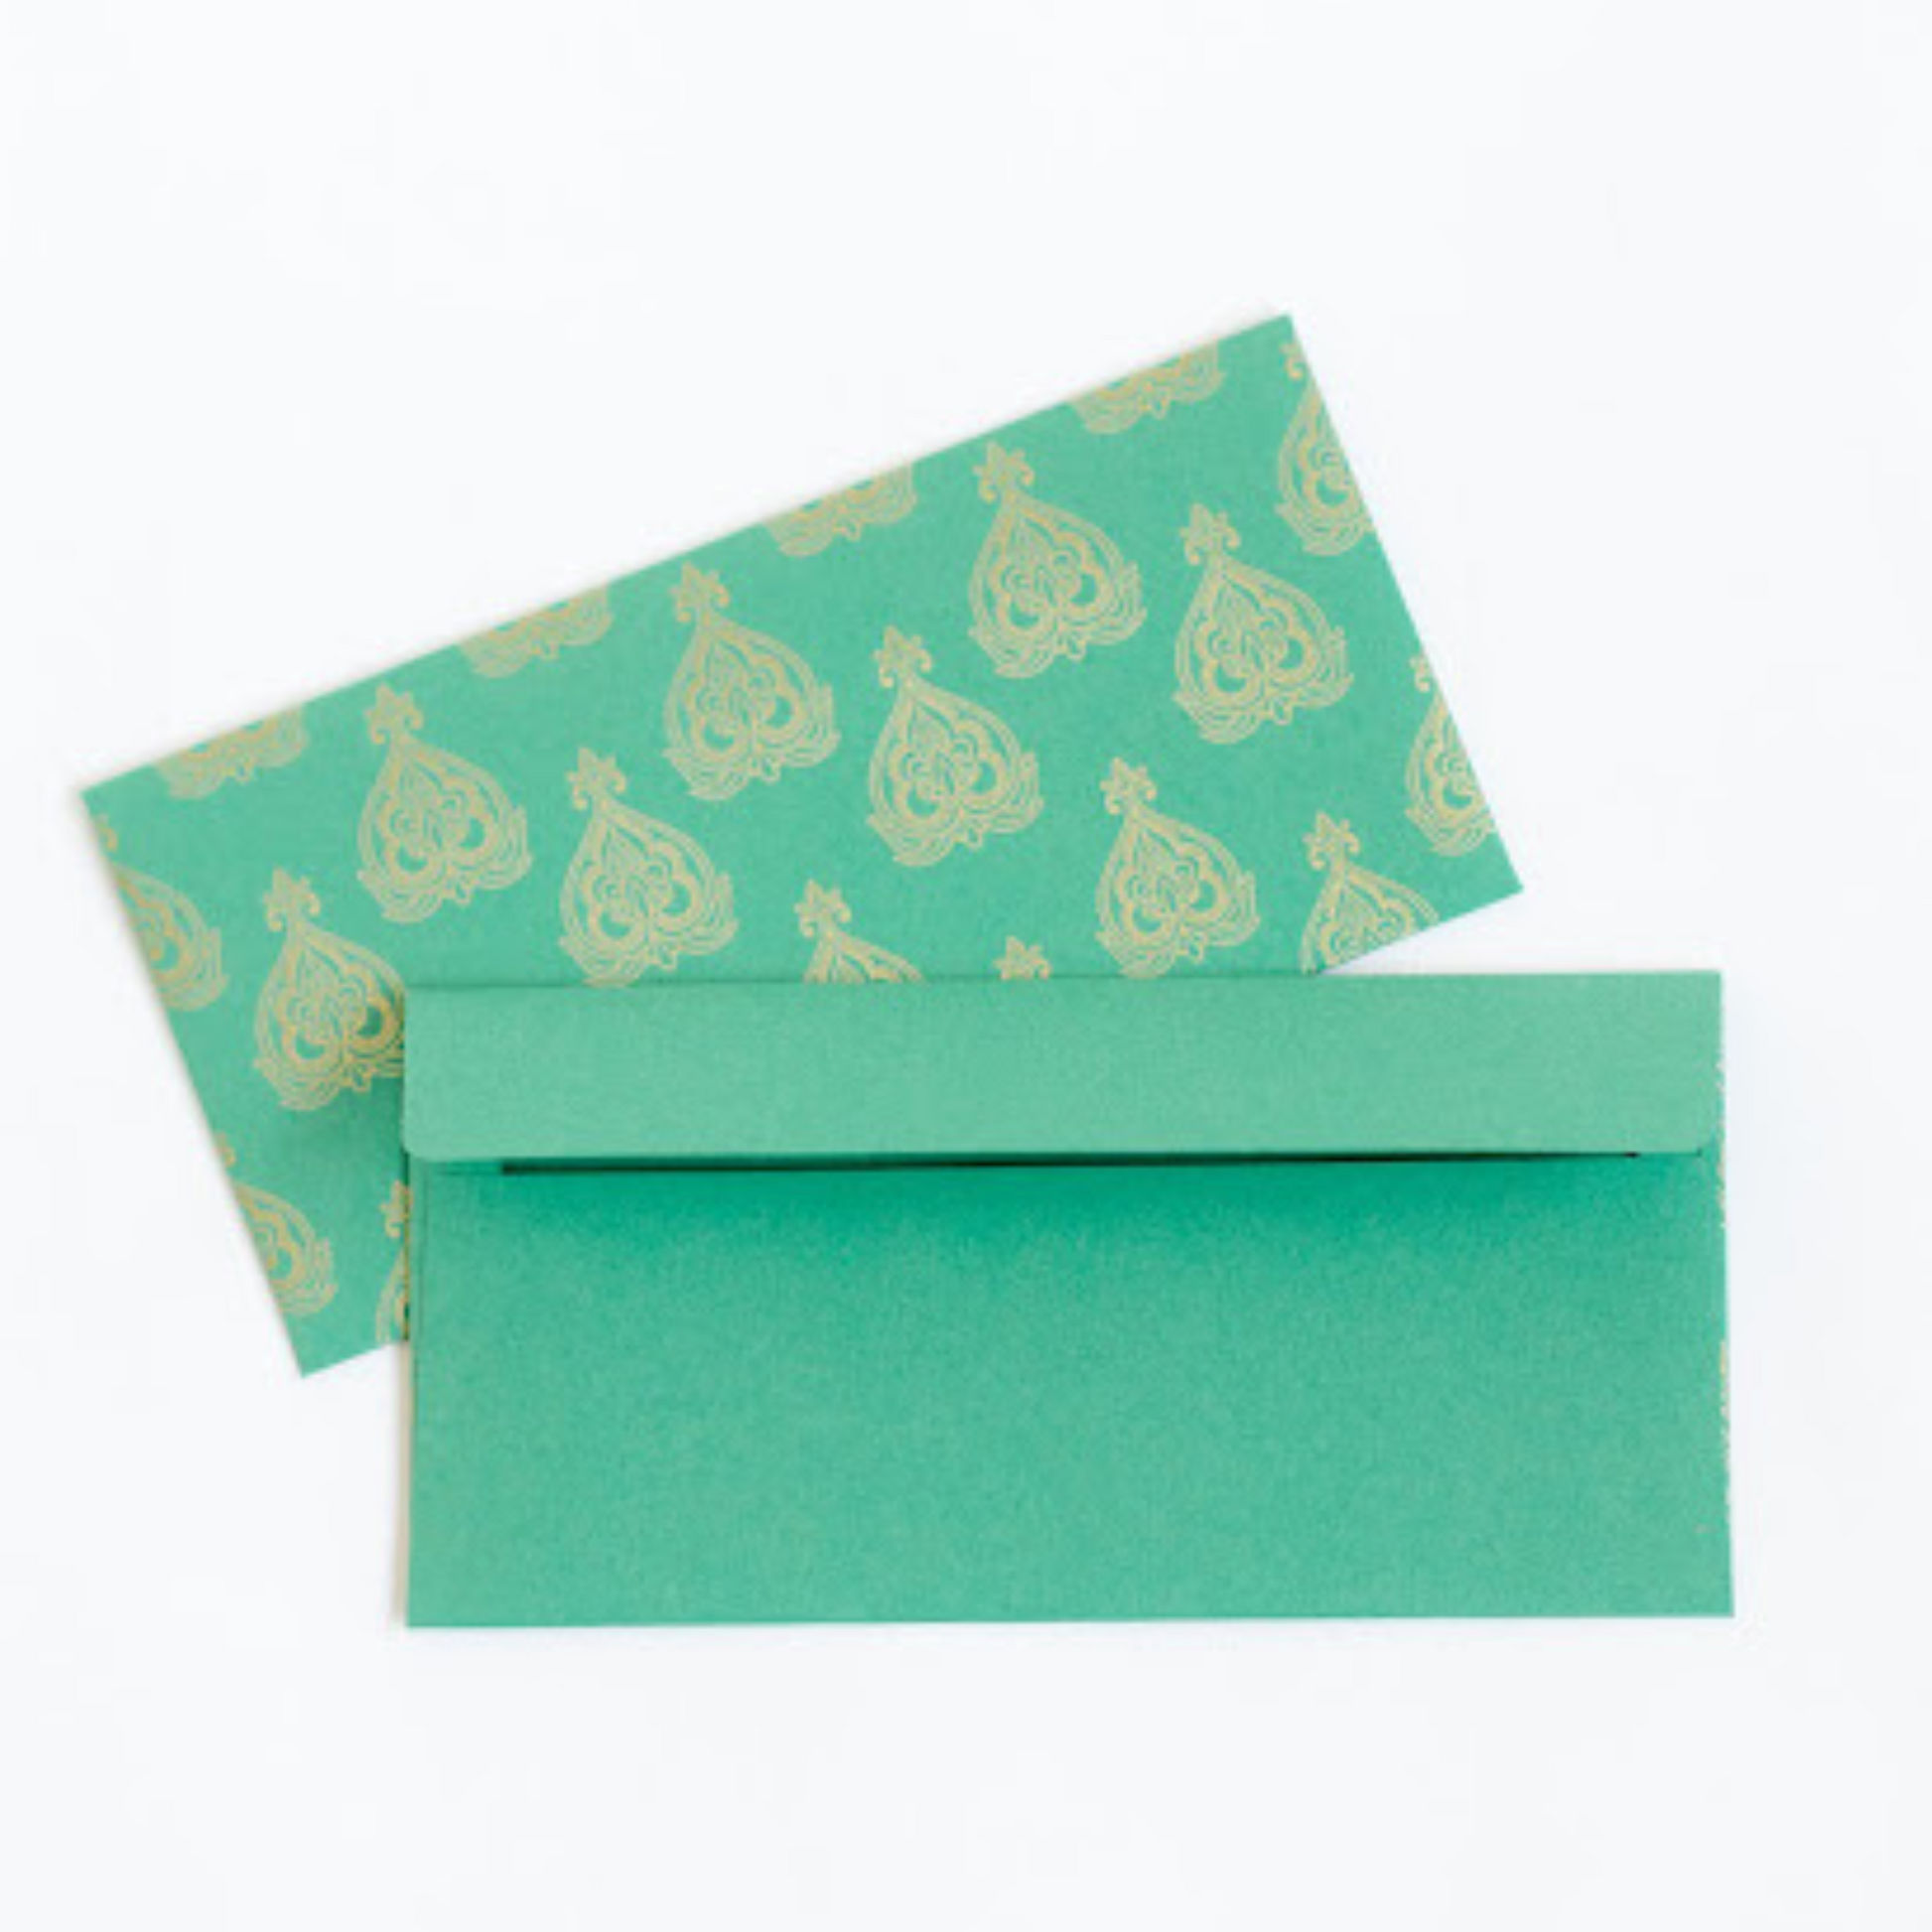 pack of 5 green and gold shugun wedding envelopes